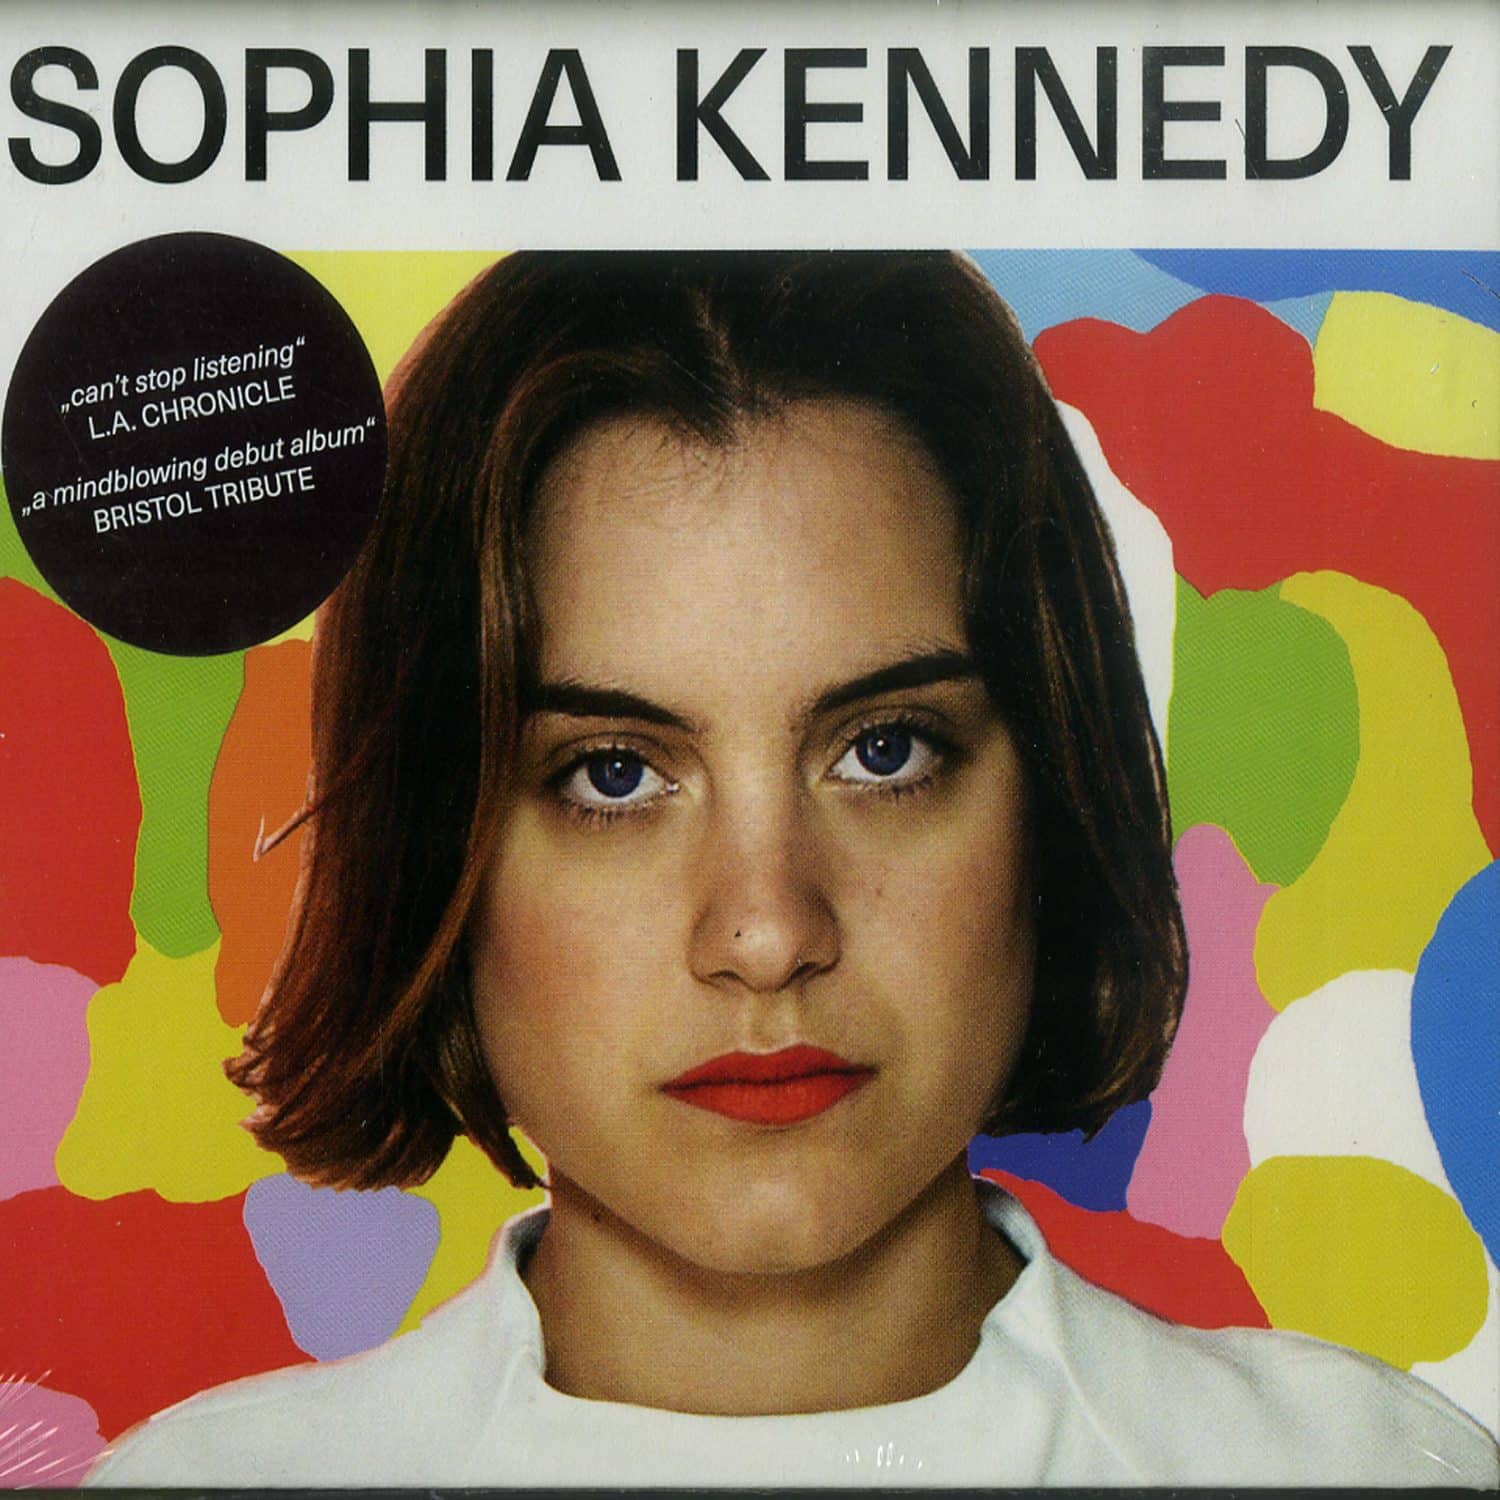 Sophia Kennedy - SOPHIA KENNEDY 